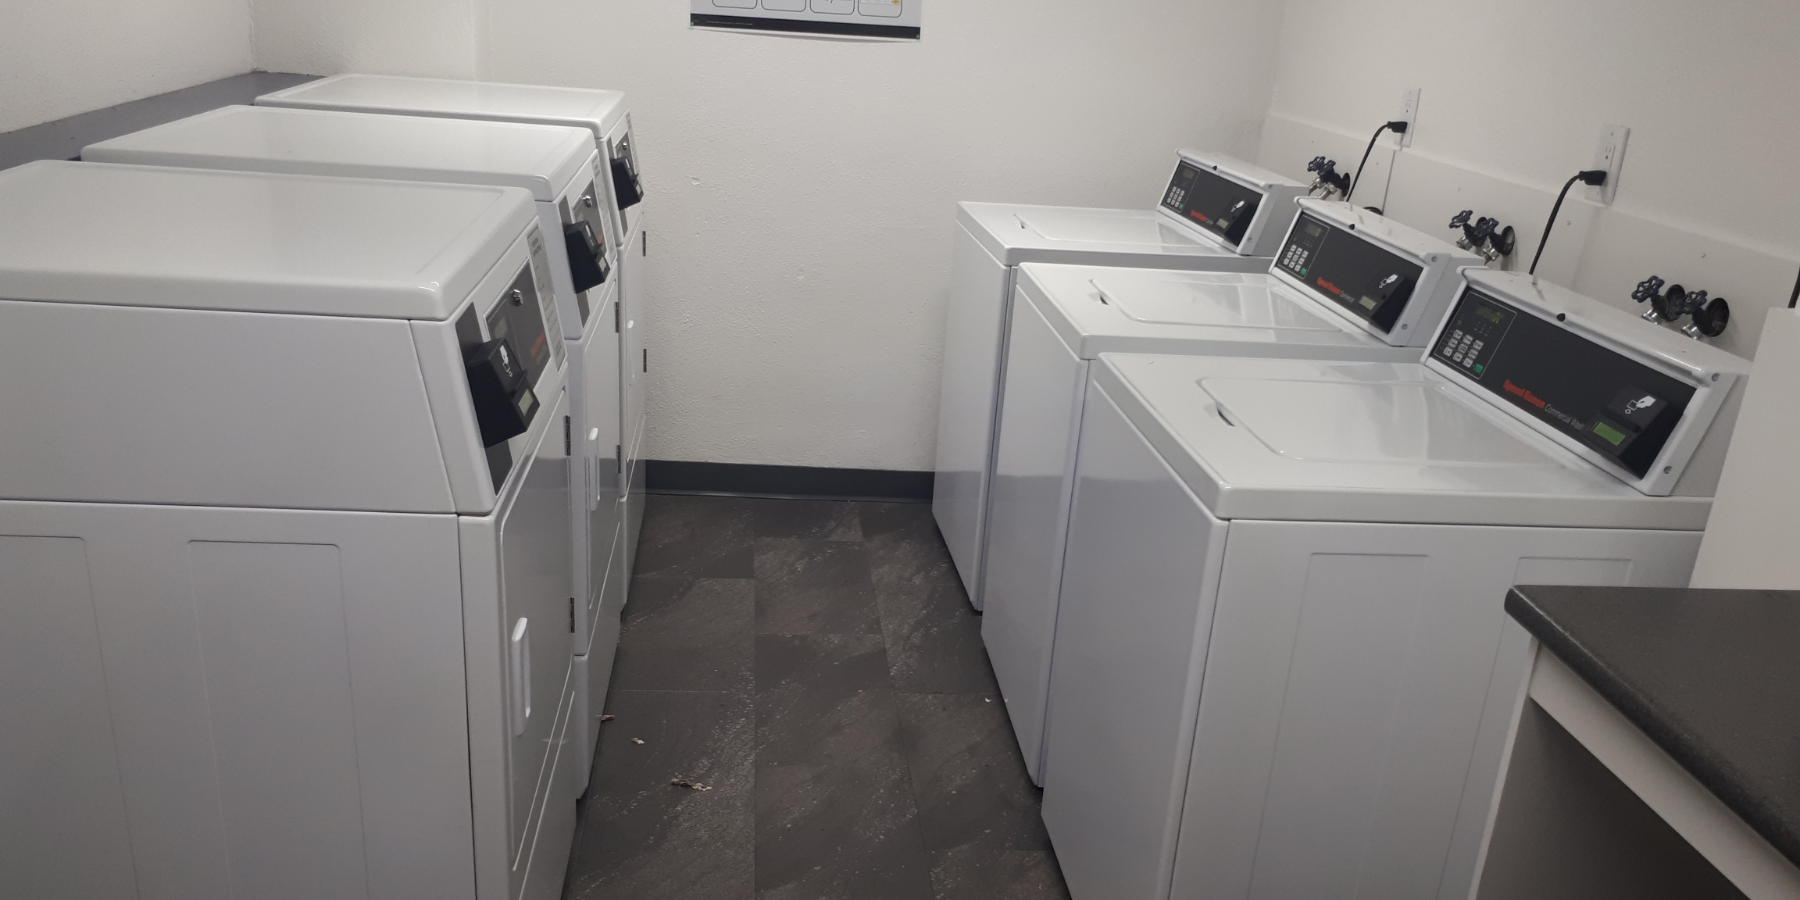 Apartment Laundry Room